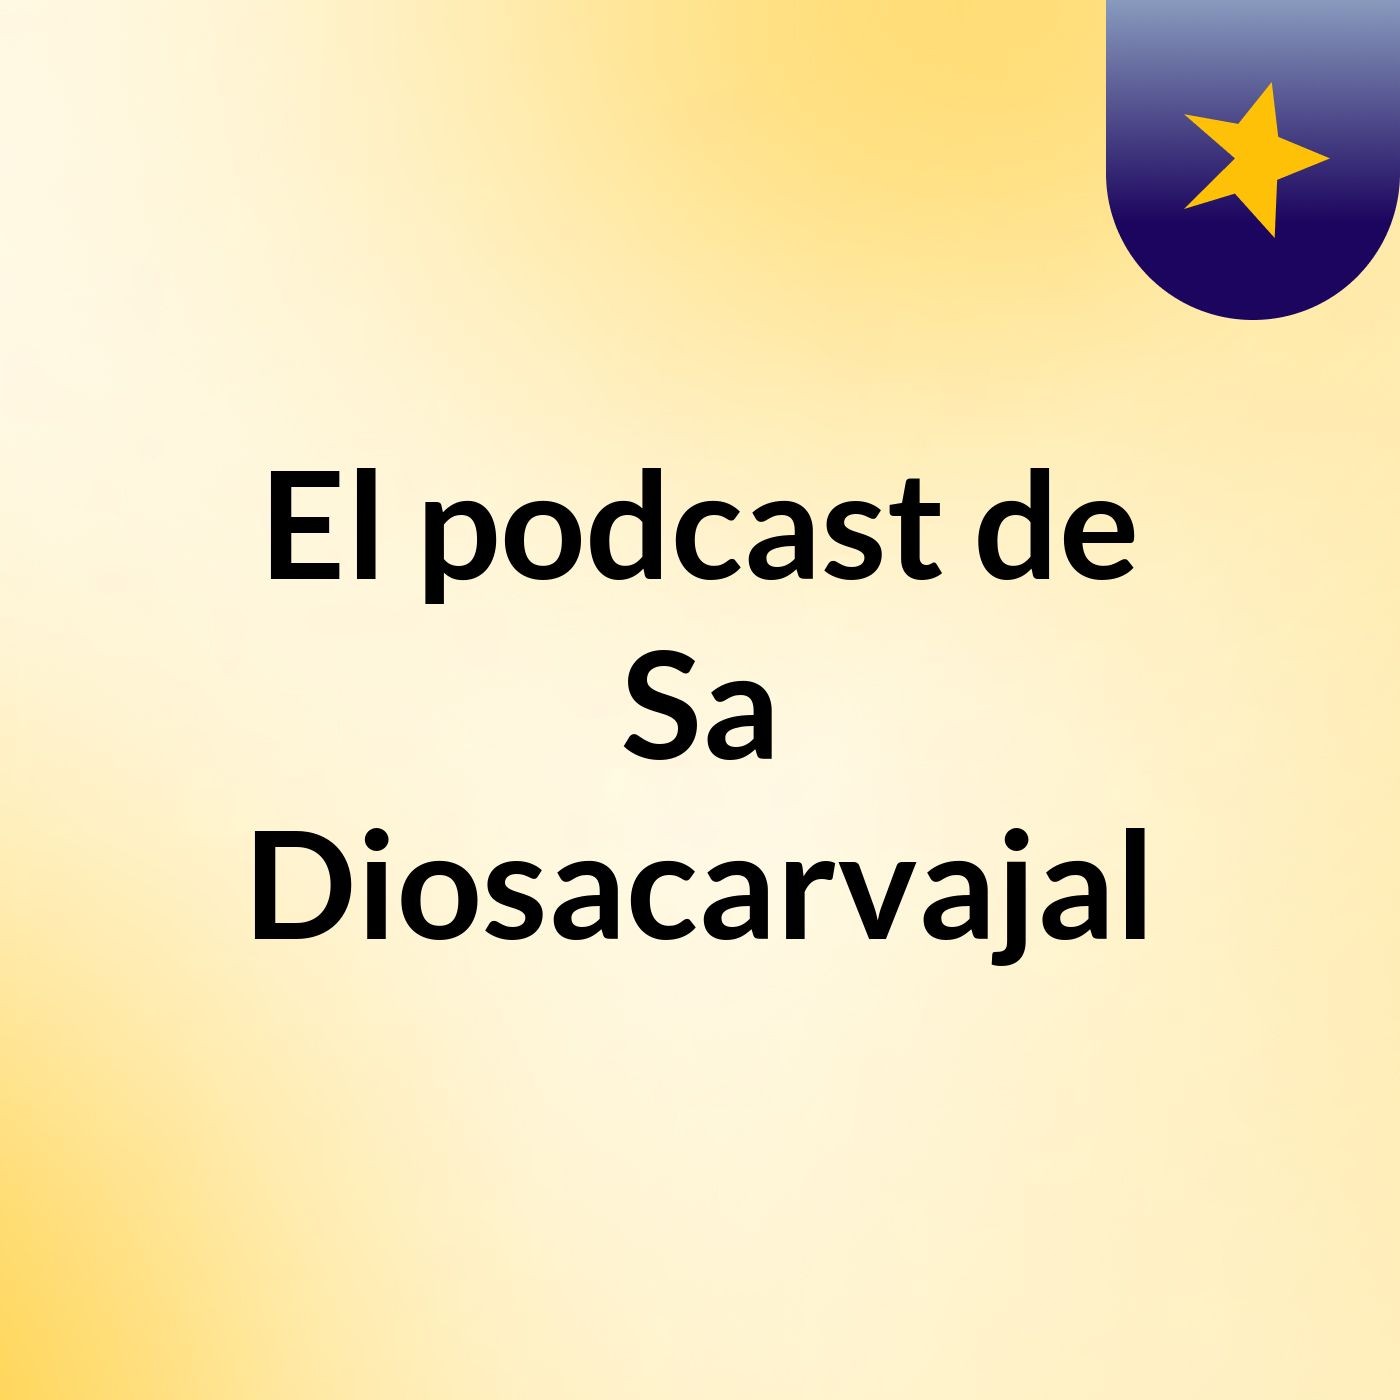 El podcast de Sa Diosacarvajal